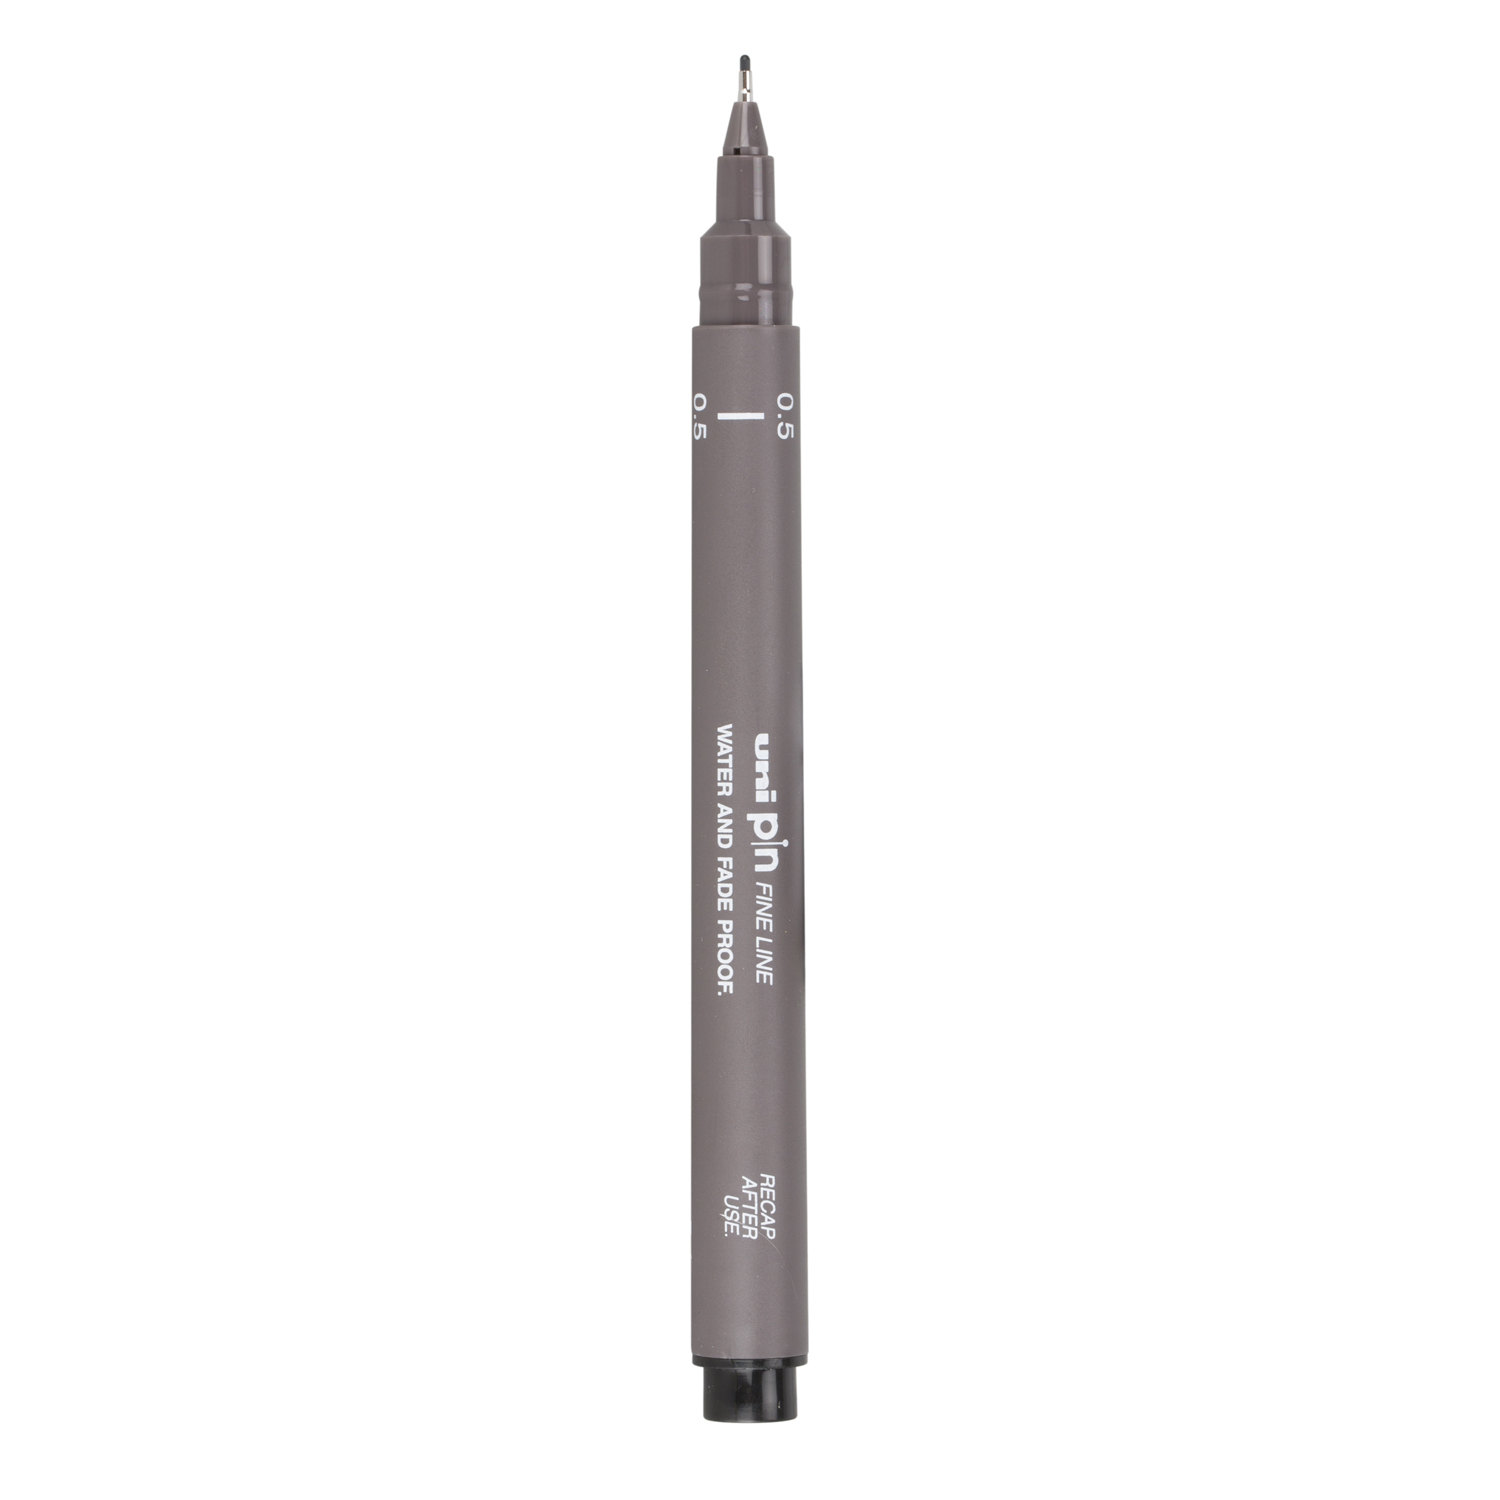 Uni-ball 0.5mm Dark Grey Pin Fine Liner Drawing Pen Image 2